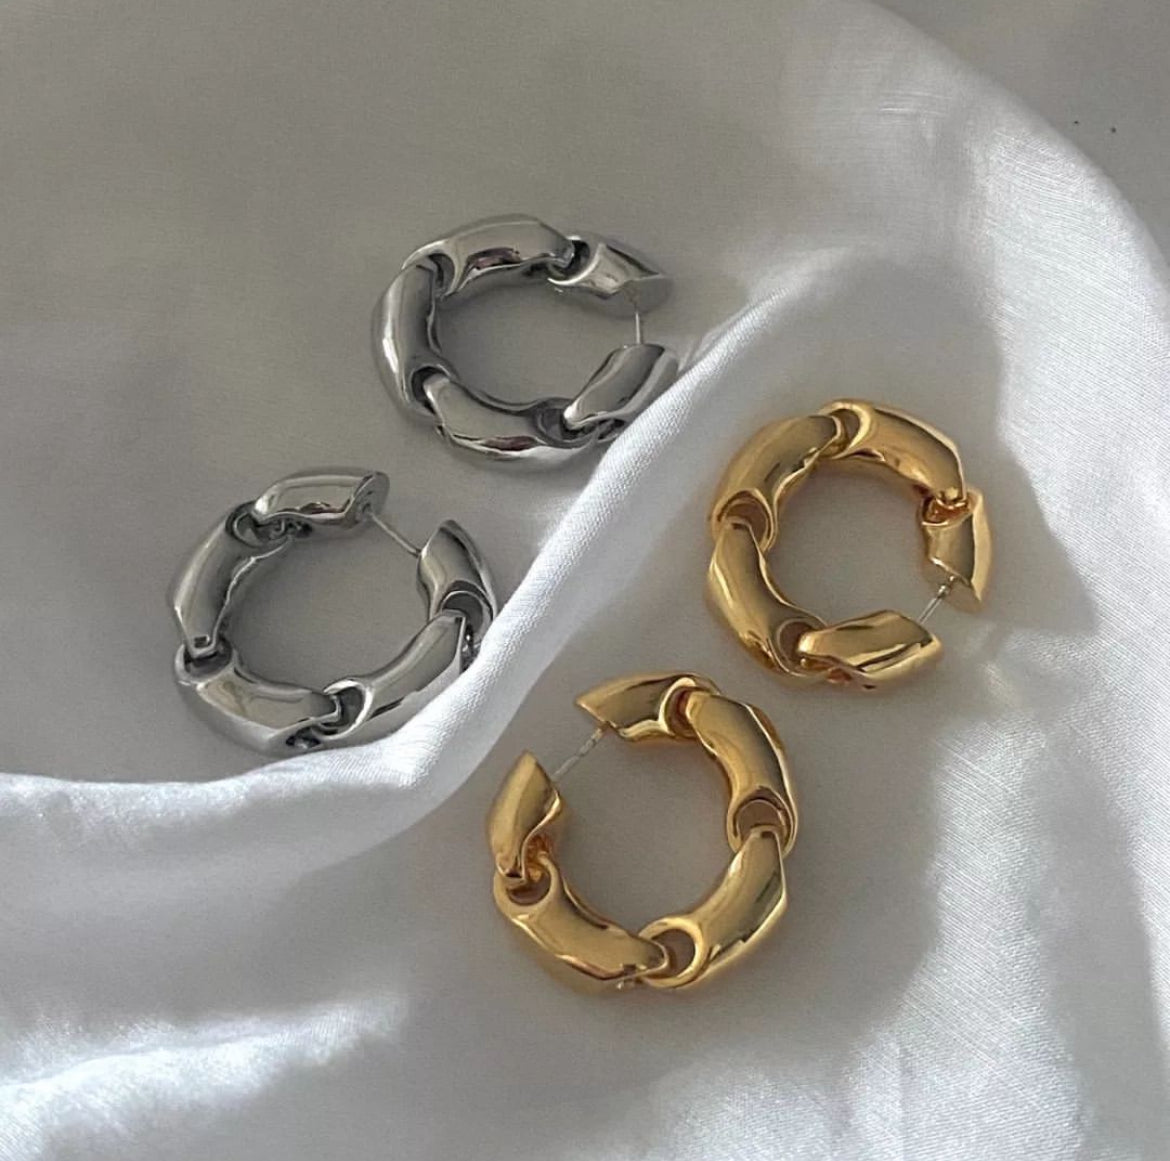 Karen earrings in Gold